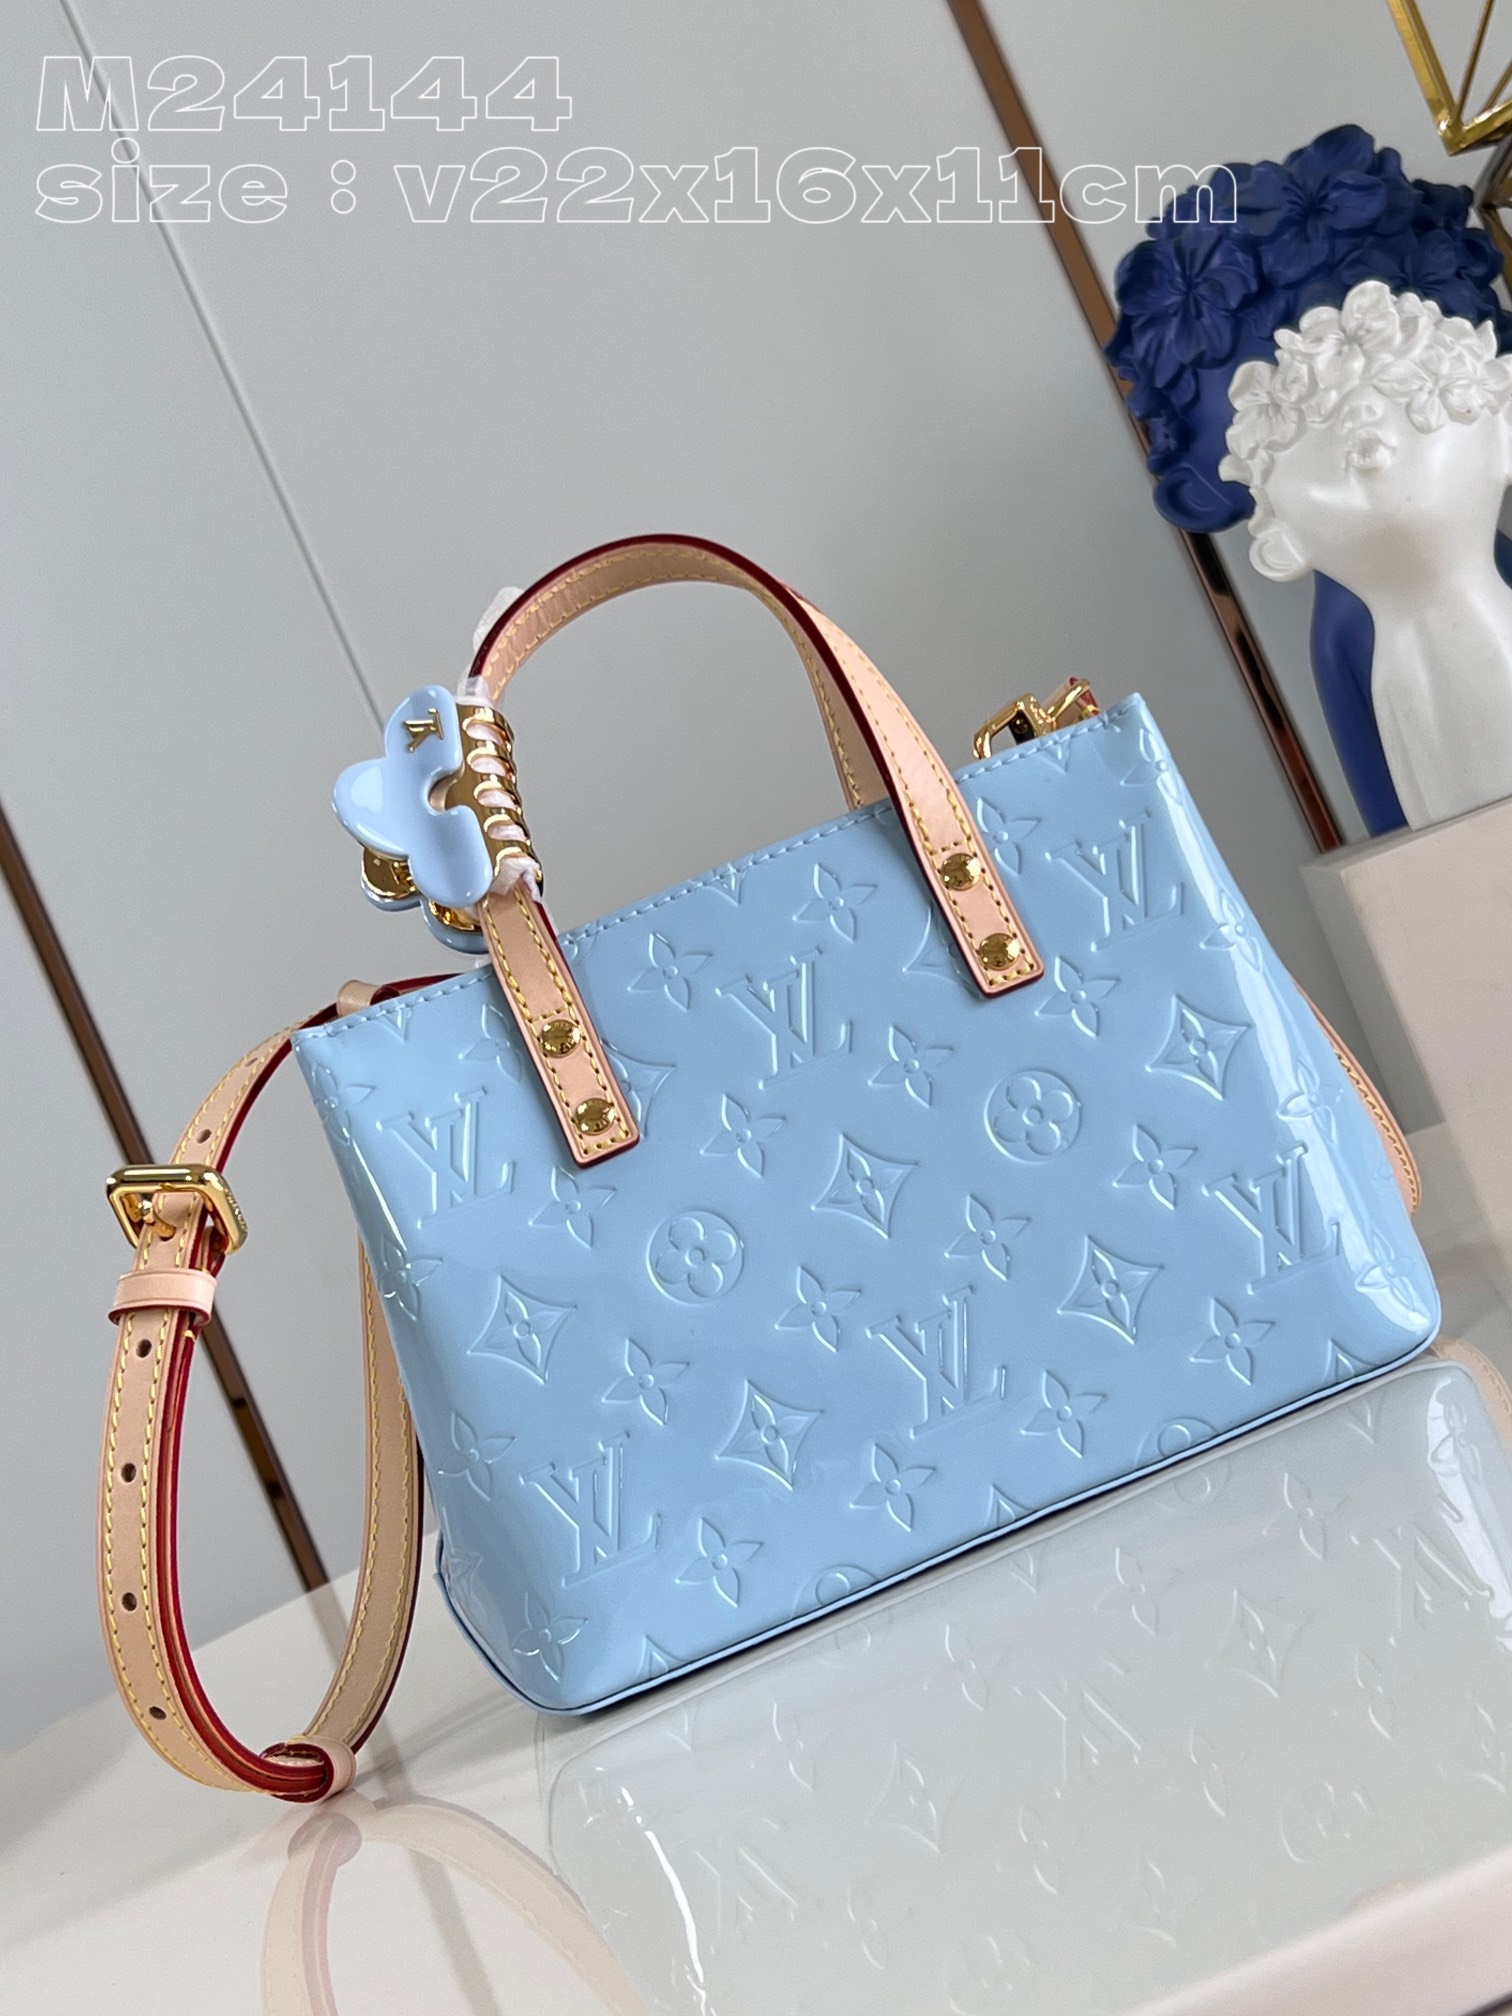 Louis Vuitton Bags Handbags Blue Pink Monogram Vernis Cowhide Spring/Summer Collection M24144